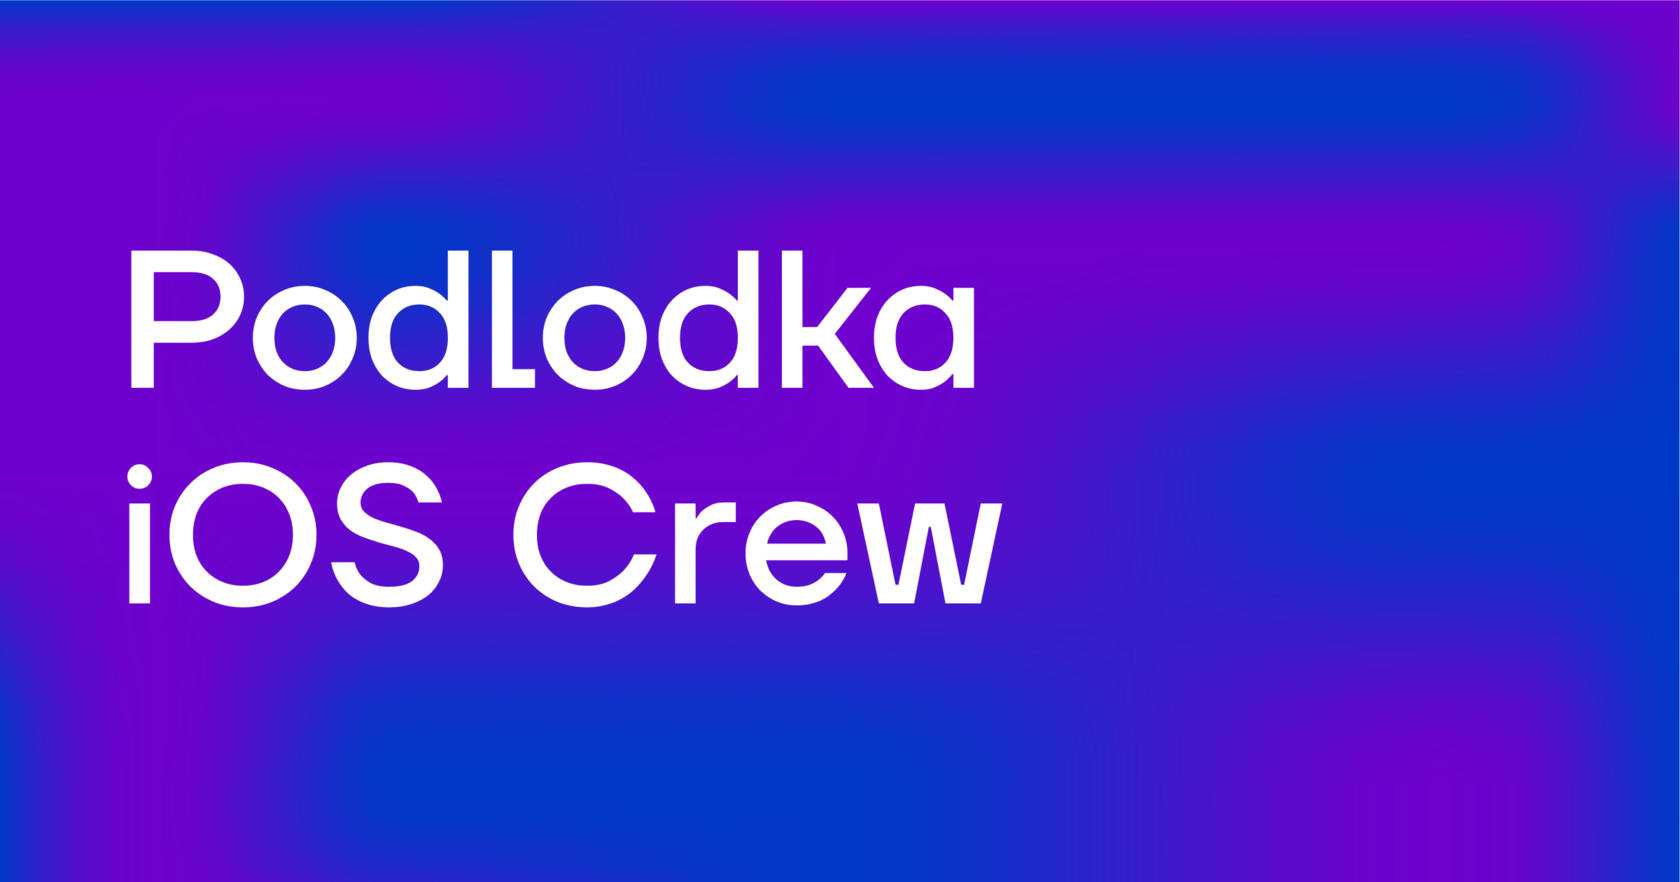 Онлайн-конференция Podlodka iOS Crew, сезон #7